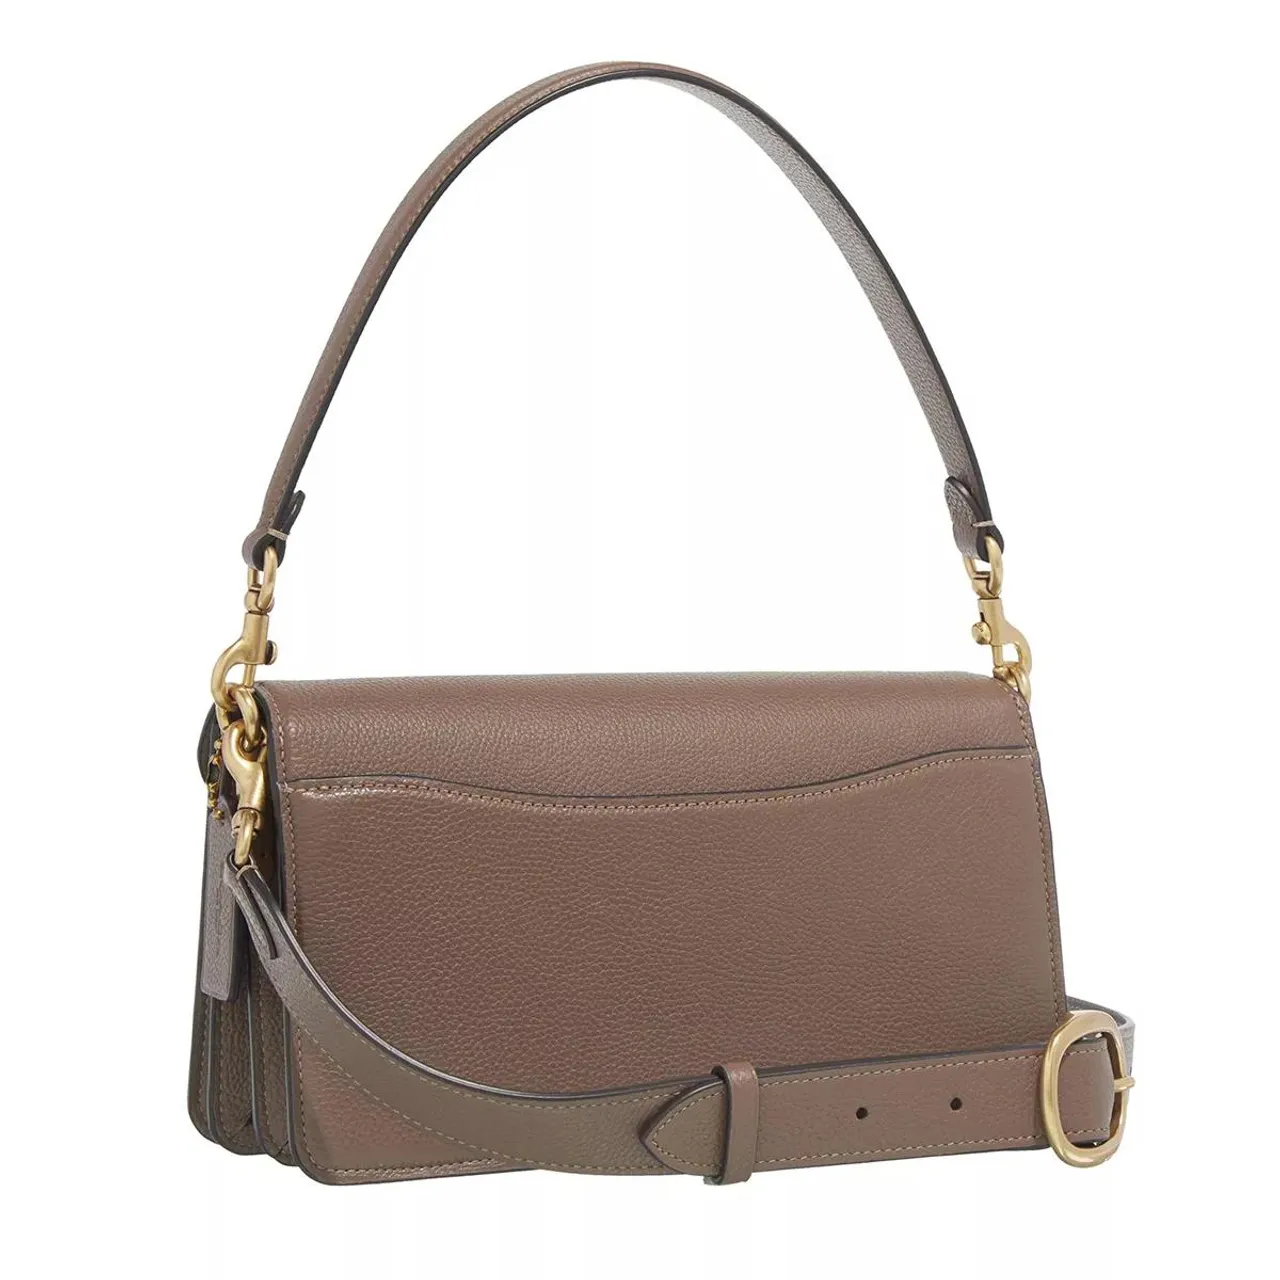 Coach Hobo Bags - Polished Pebble Leather Tabby Shoulder Bag 26 - brown - Hobo Bags for ladies